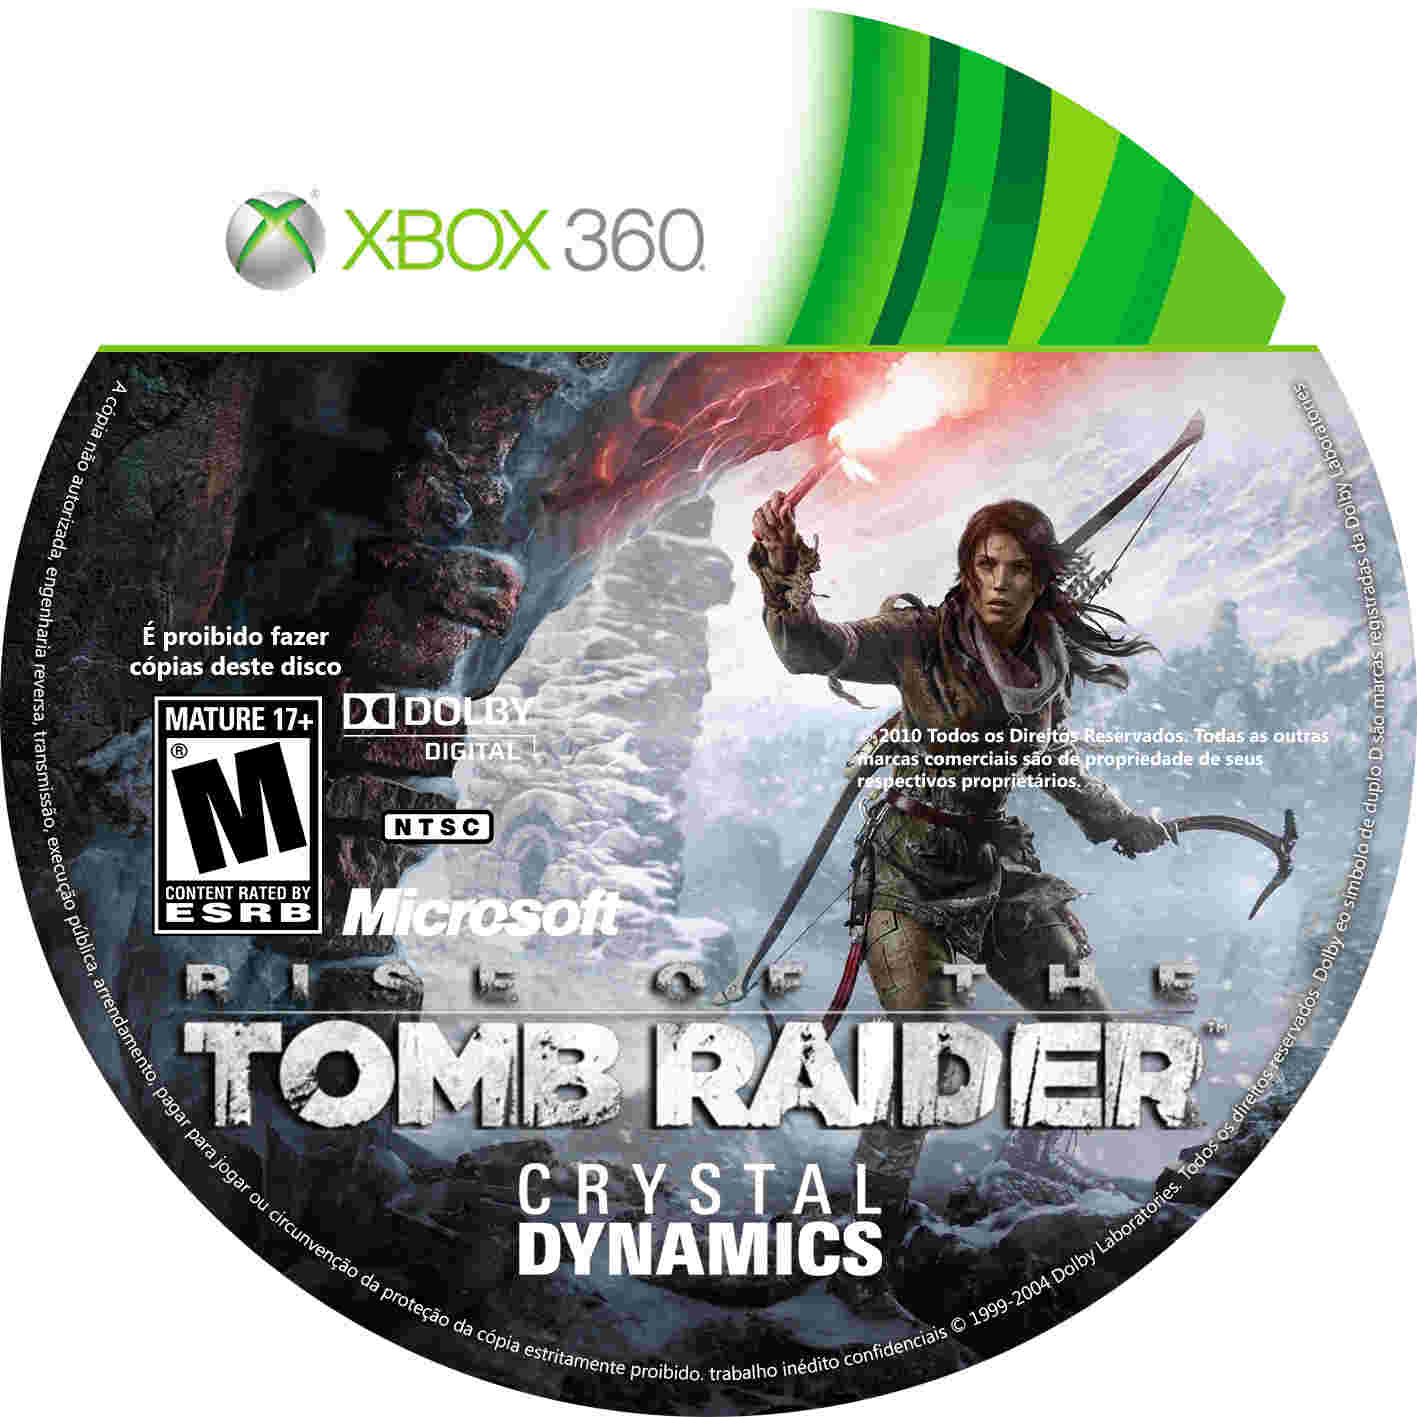 Игры для прошитого xbox 360. Диск Tomb Raider для Xbox 360. Rise of the Tomb Raider Xbox 360 диск. Обложка для диска Xbox 360 Tomb Raider. Risen Xbox 360 диск.